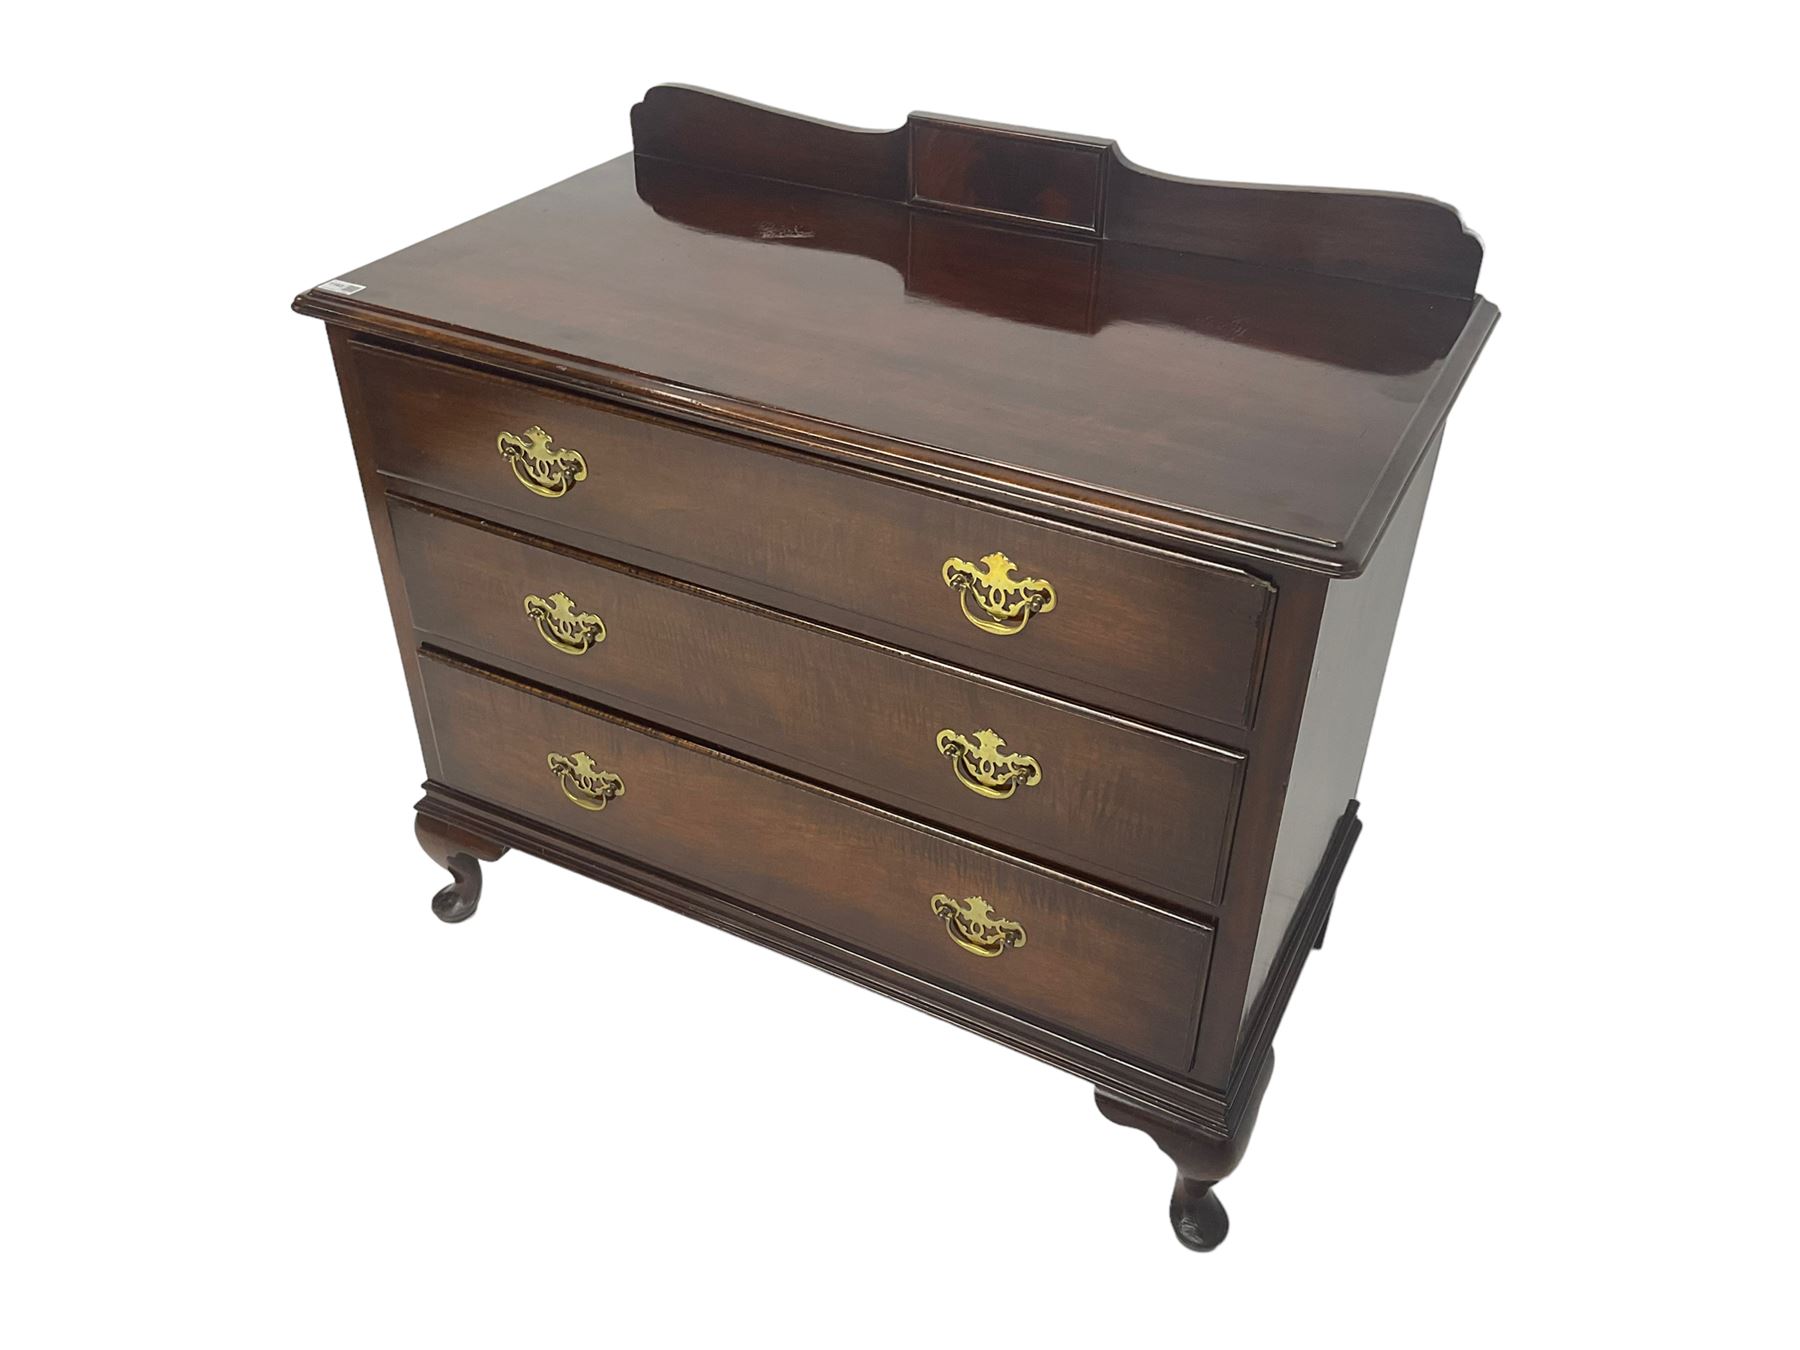 Waring & Gillow - Georgian design mahogany chest - Image 8 of 8